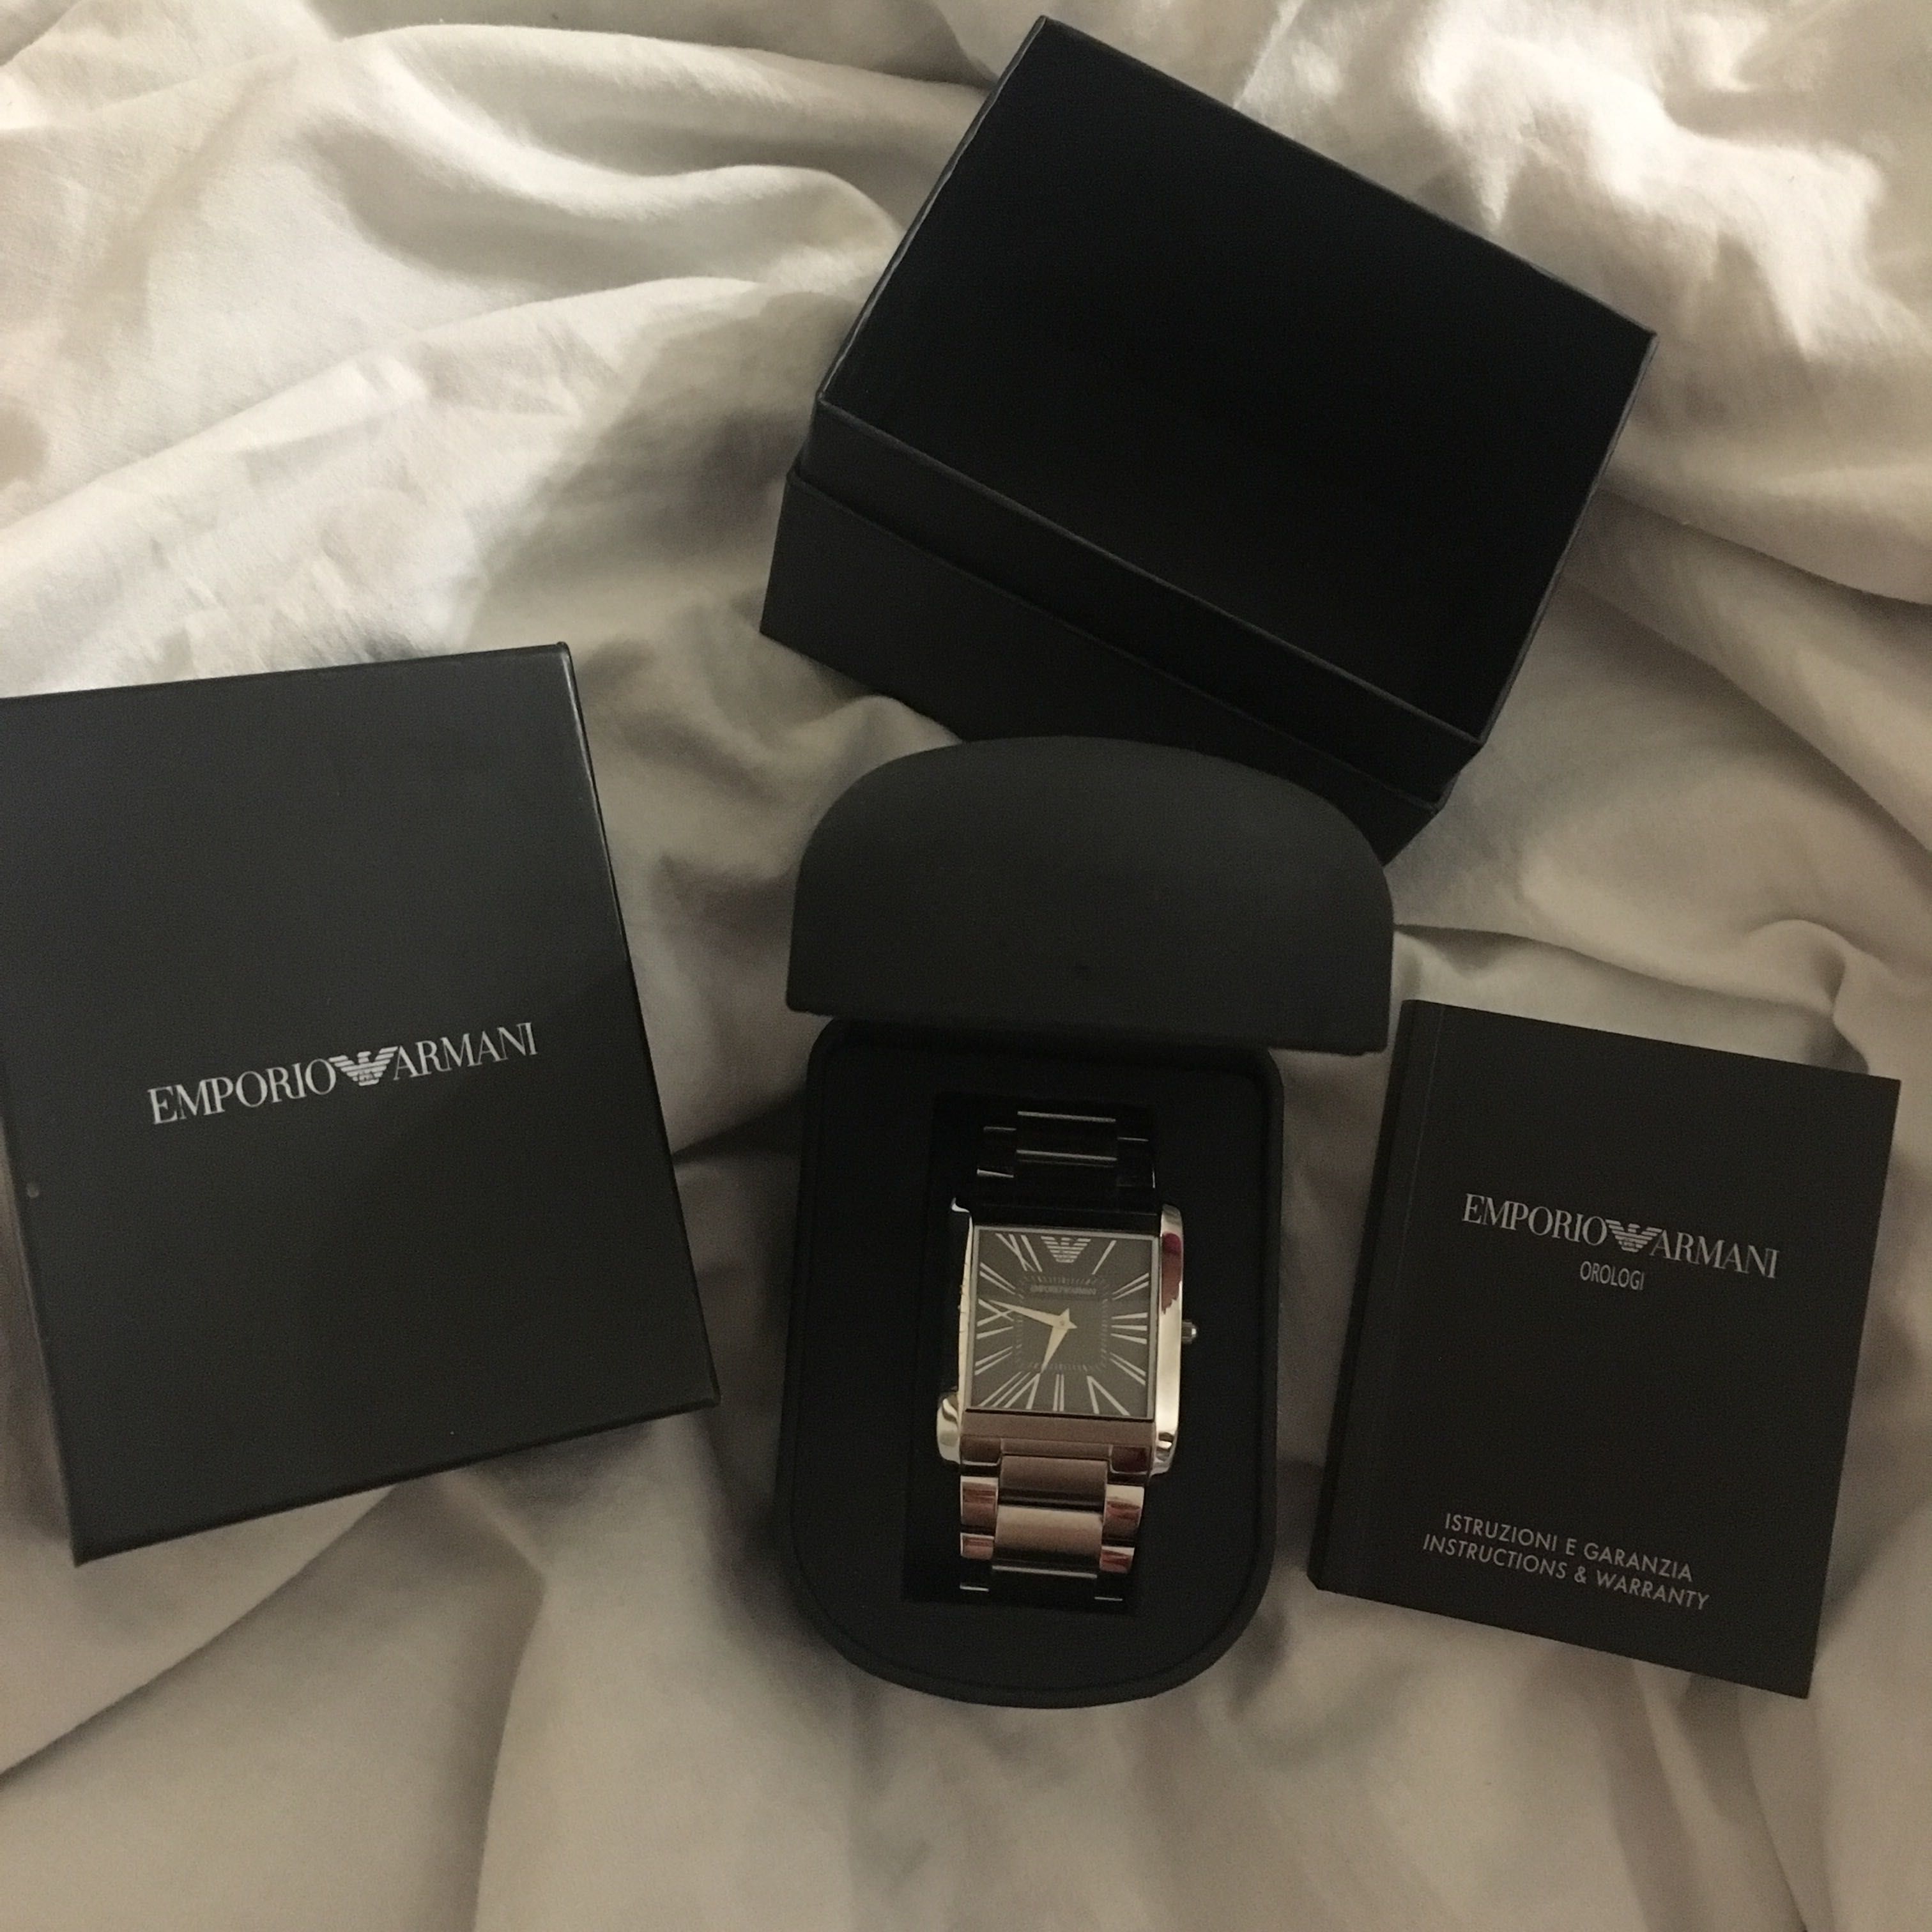 Мъжки часовник Emporio Armani Super Slim 36mm Mens Watch AR2010